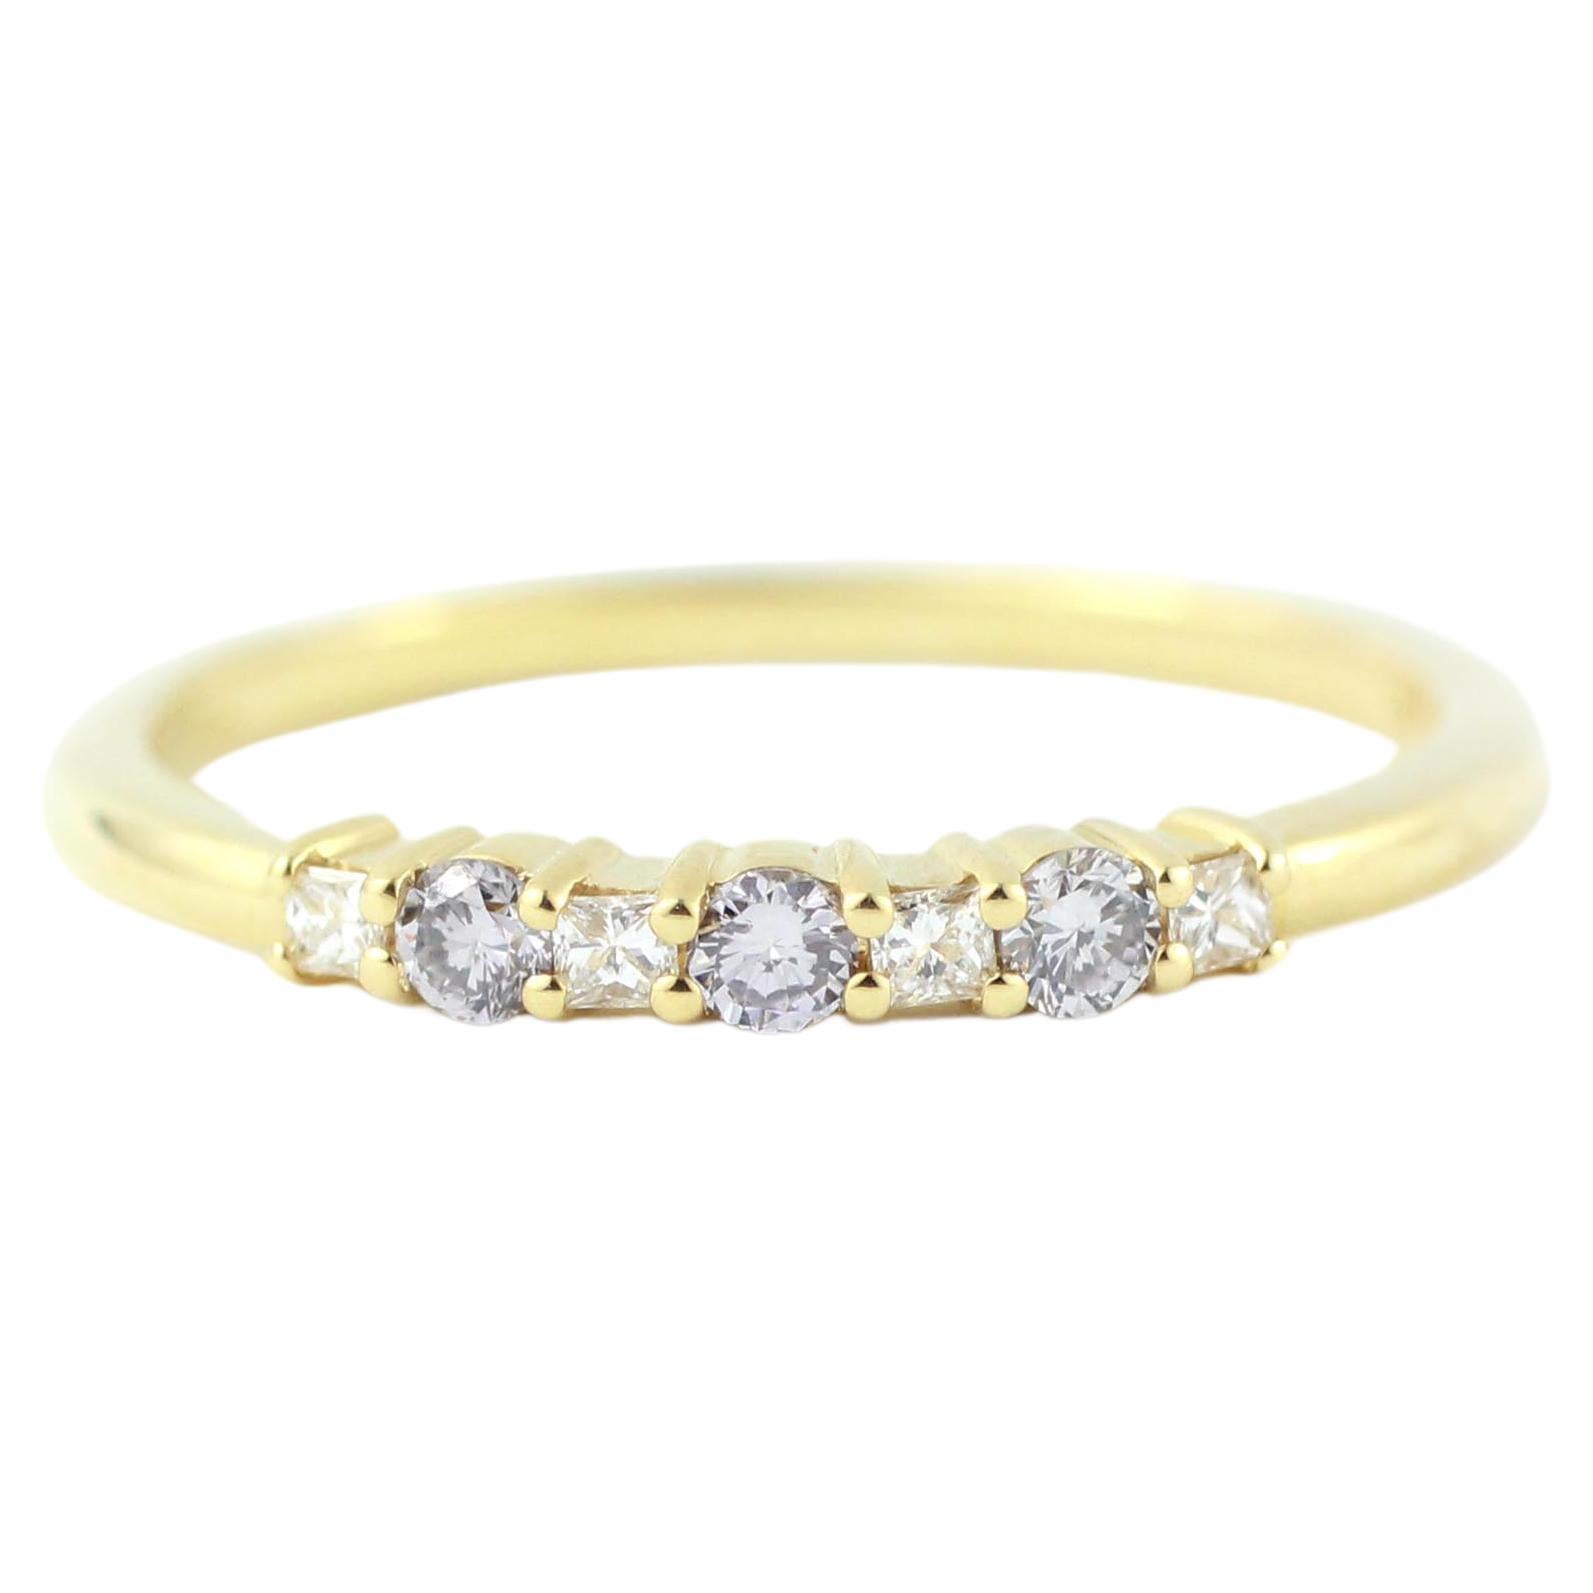 Julius Cohen Blue Diamond Ring in 18 Kt Gold